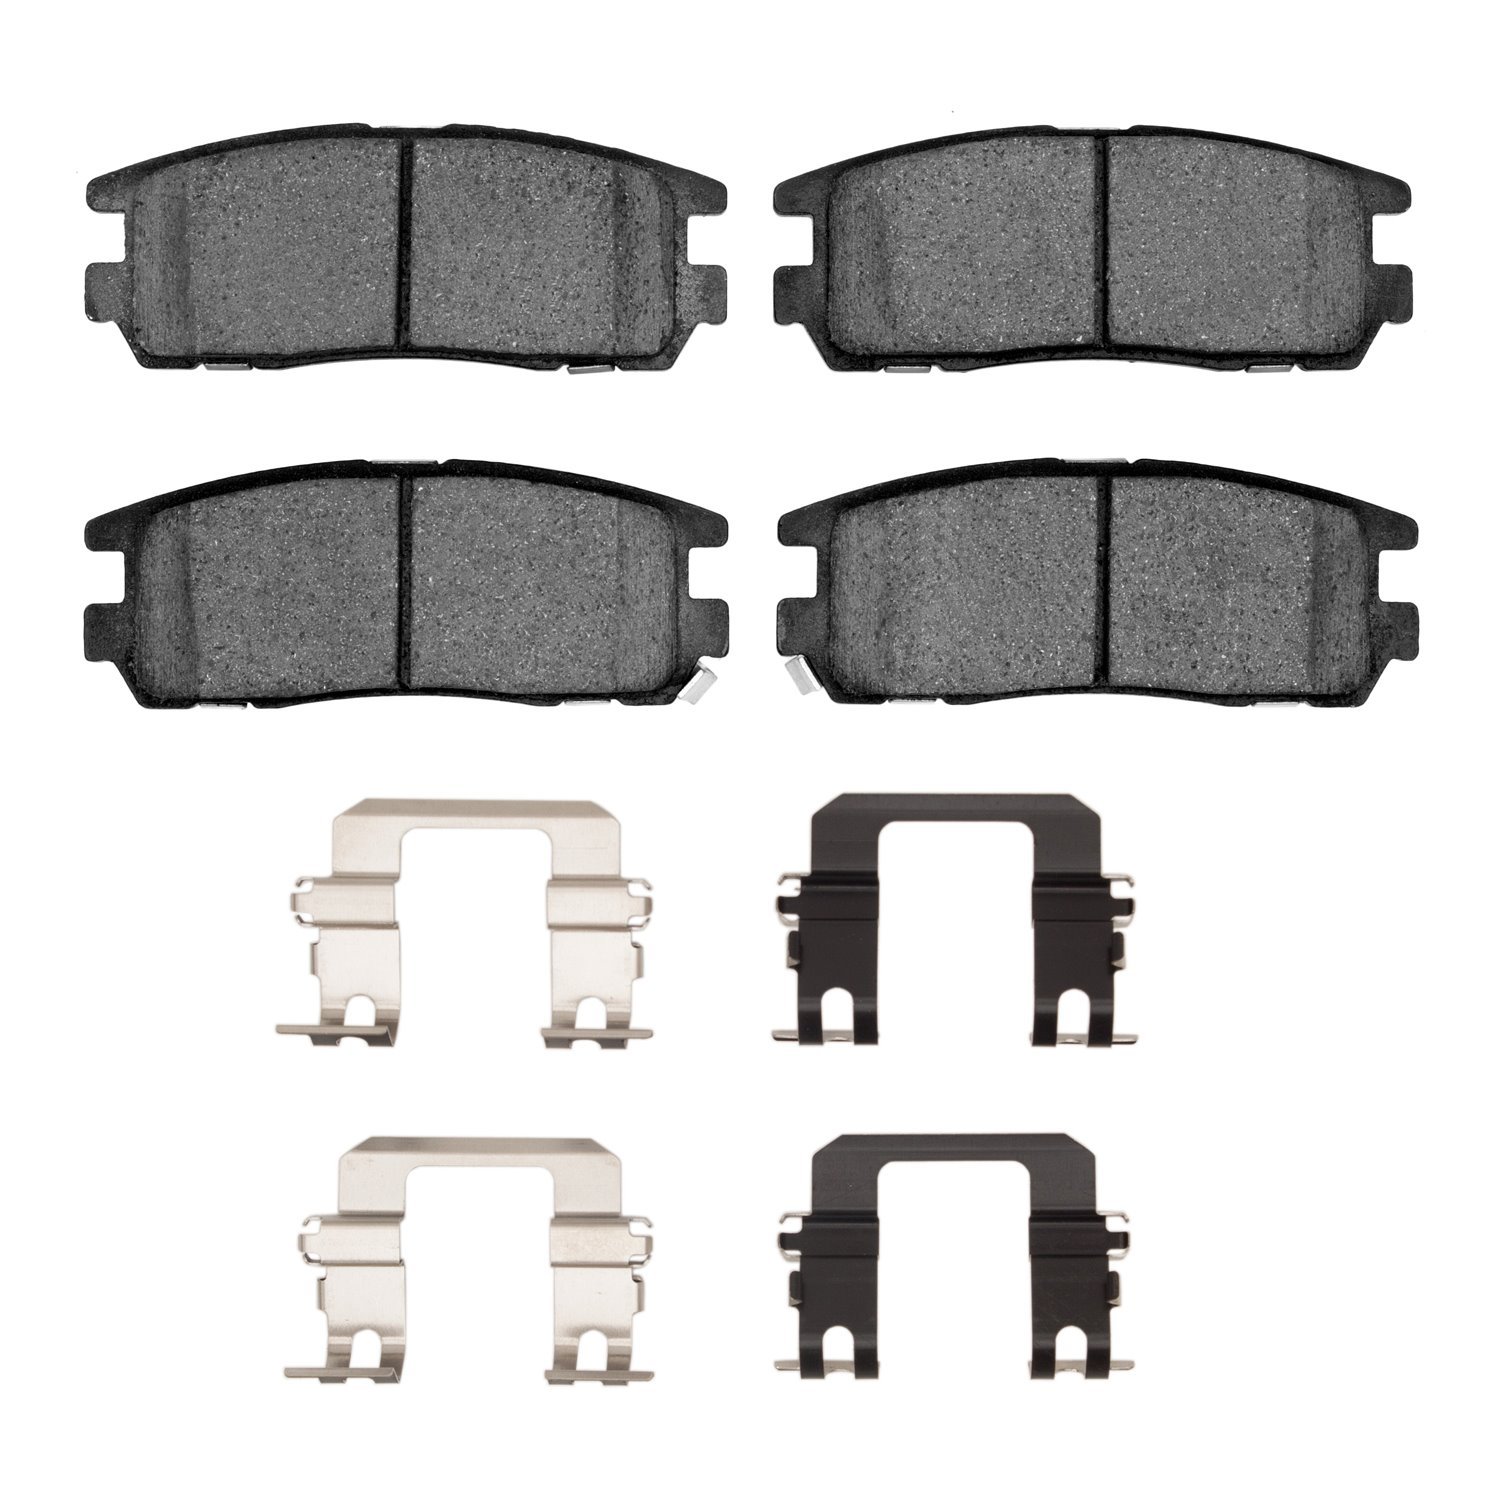 1551-0580-01 5000 Advanced Ceramic Brake Pads & Hardware Kit, 1992-2004 Multiple Makes/Models, Position: Rear